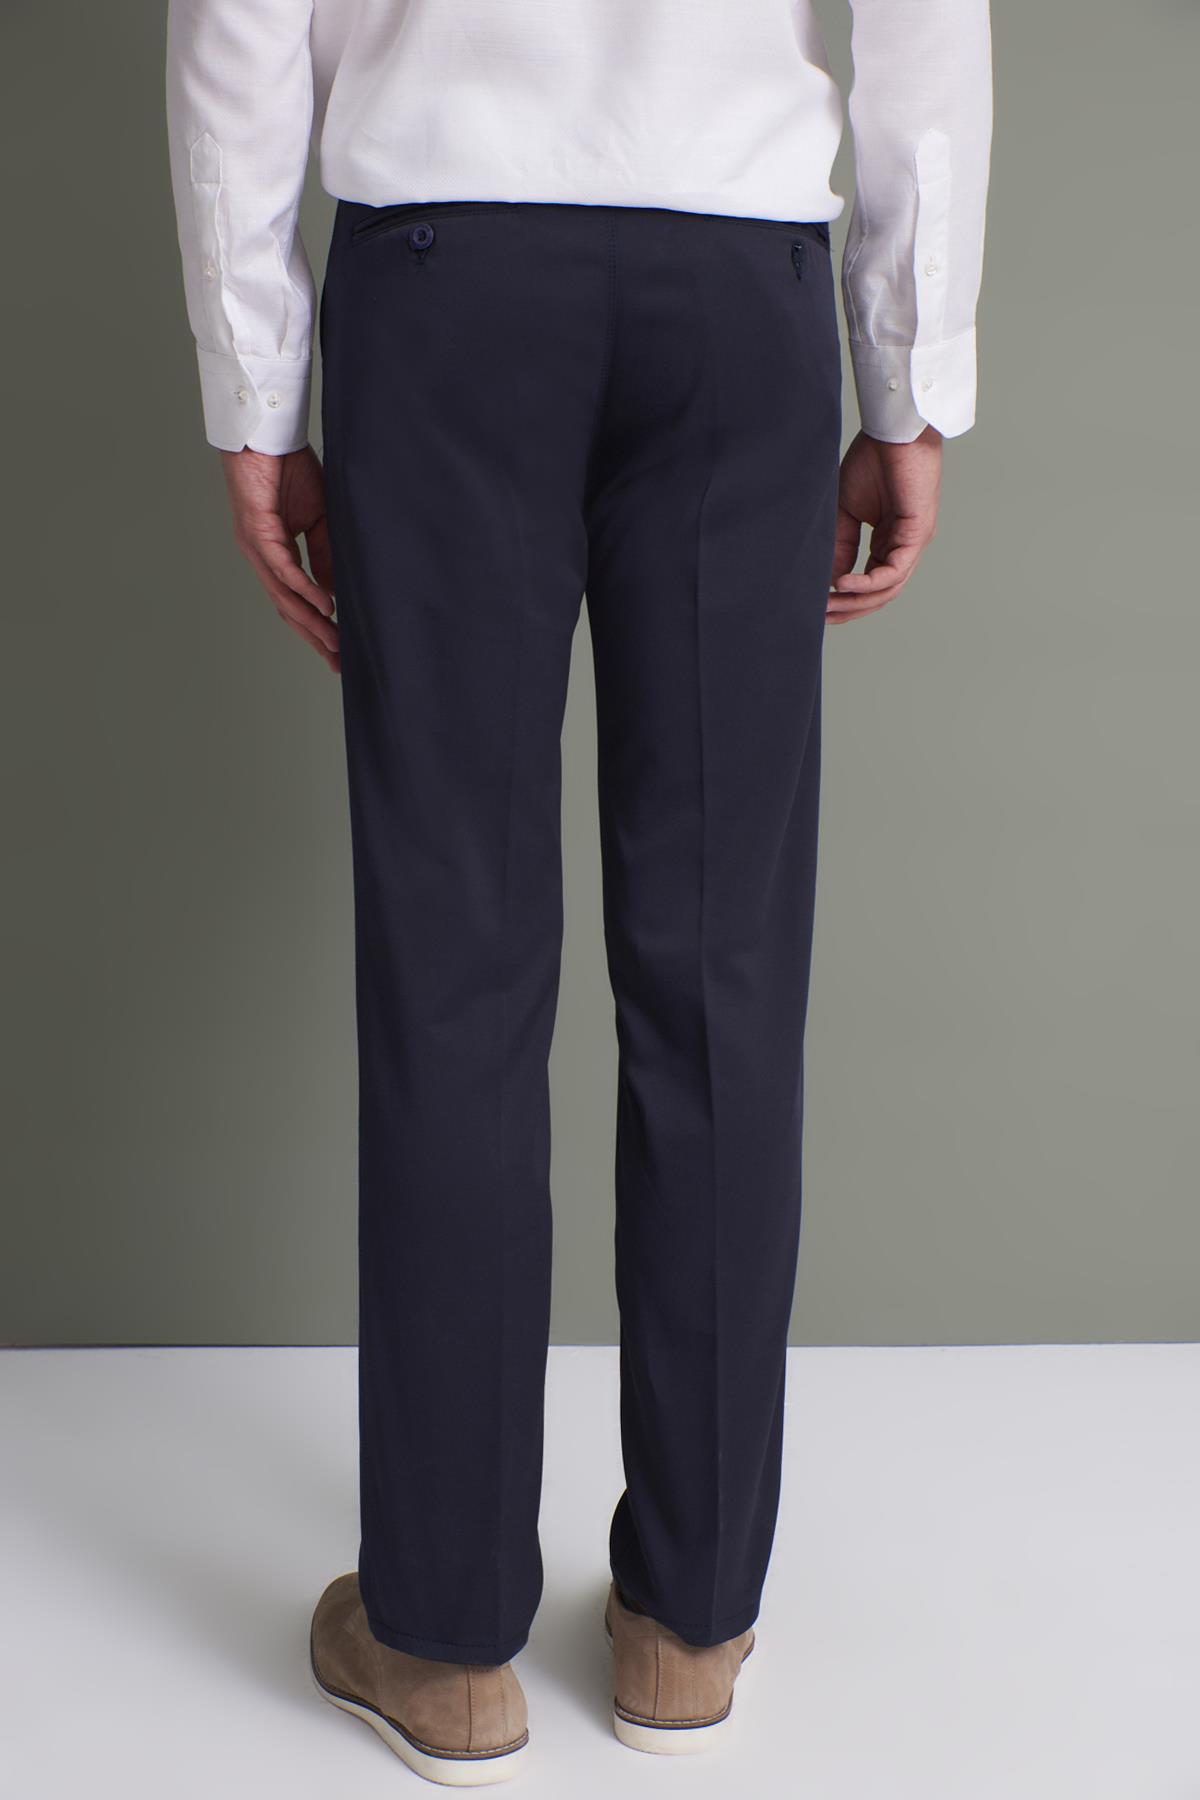 Erkek Koyu Lacivert (202) Klasik Rahat Kalıpkumaş Pantolon